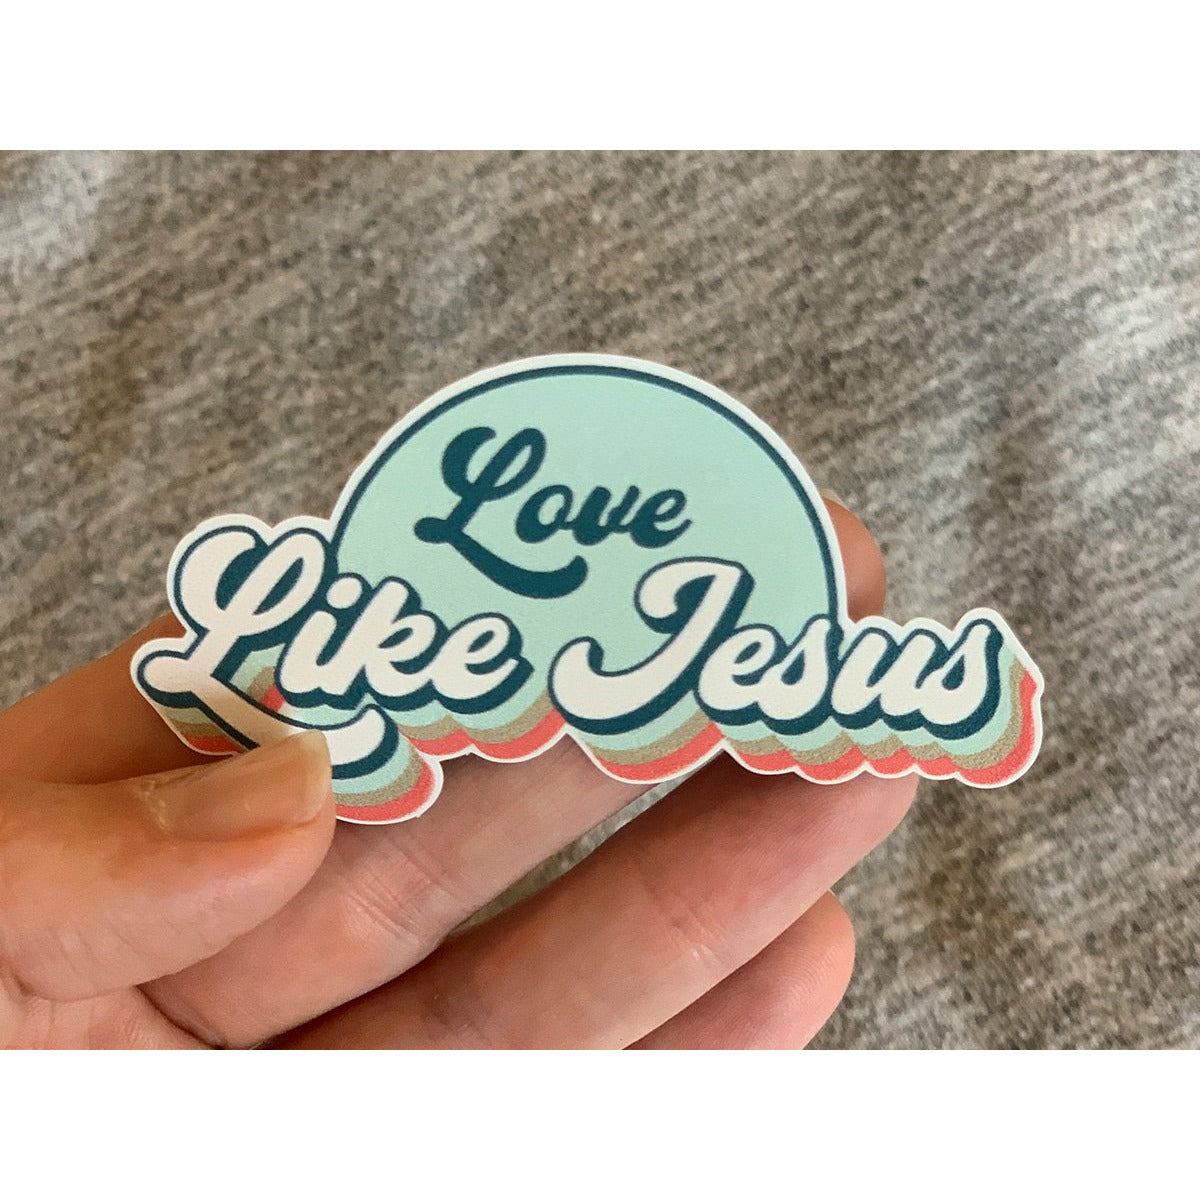 Christian Jesus Love Stickers Pack Wholesale sticker Vinyl Decals